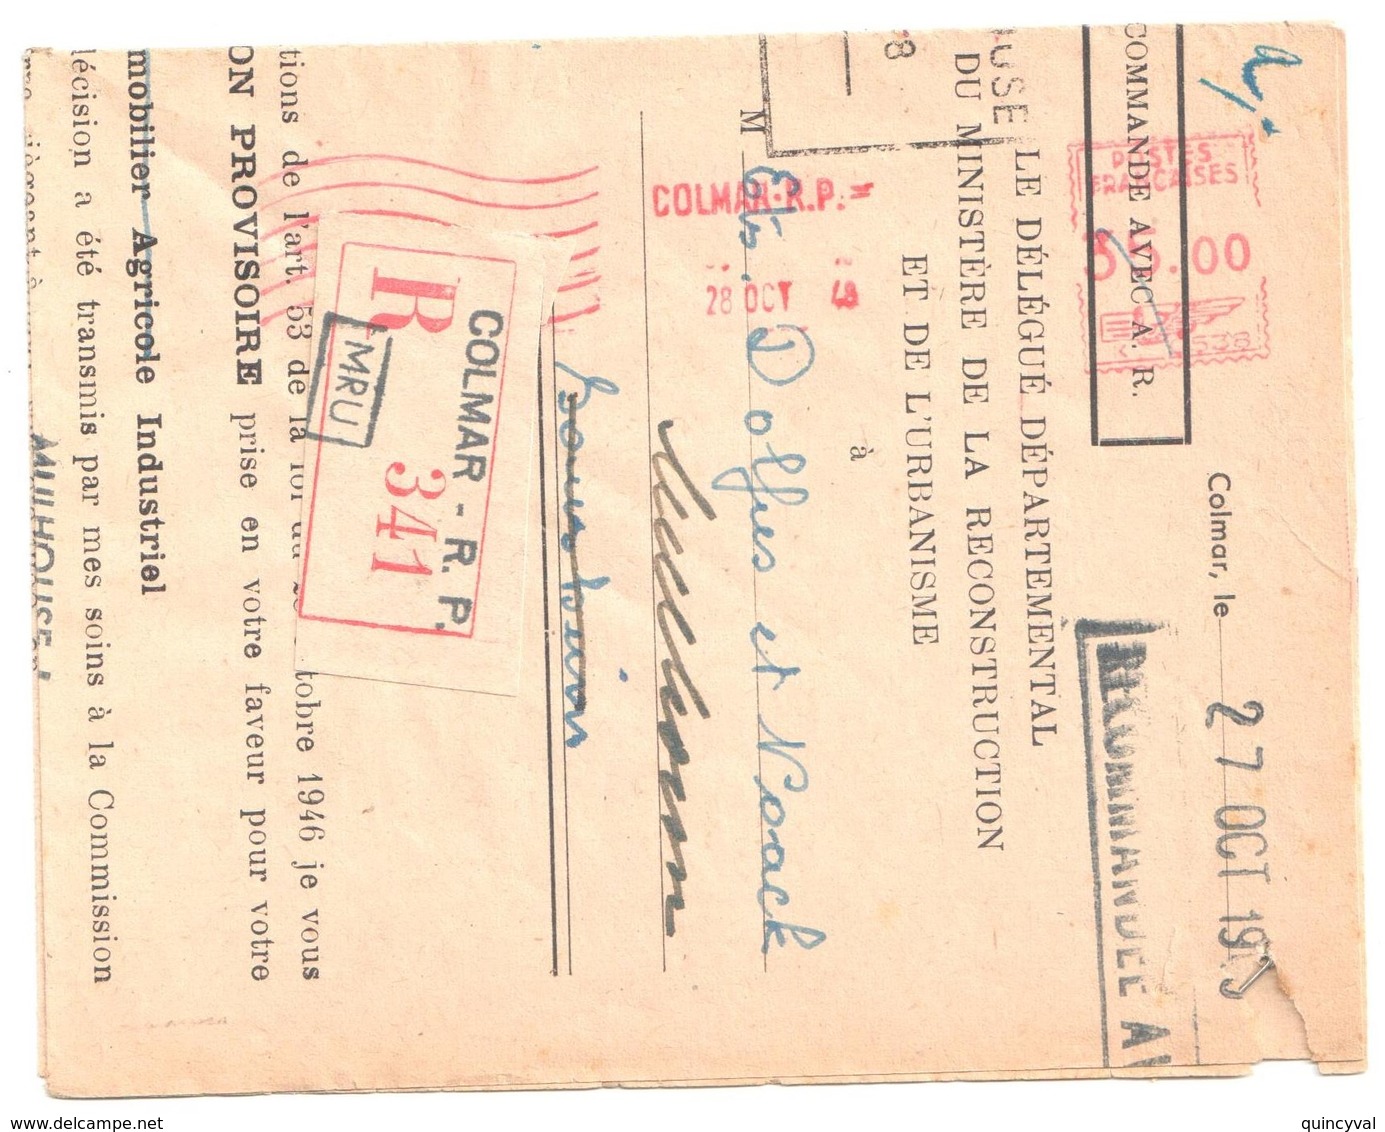 COLMAR RP Lettre Recommandée 28 10 1948 EMA Postes Françaises K Dest Sausheimb Ob Hexa Pointillé - EMA (Print Machine)